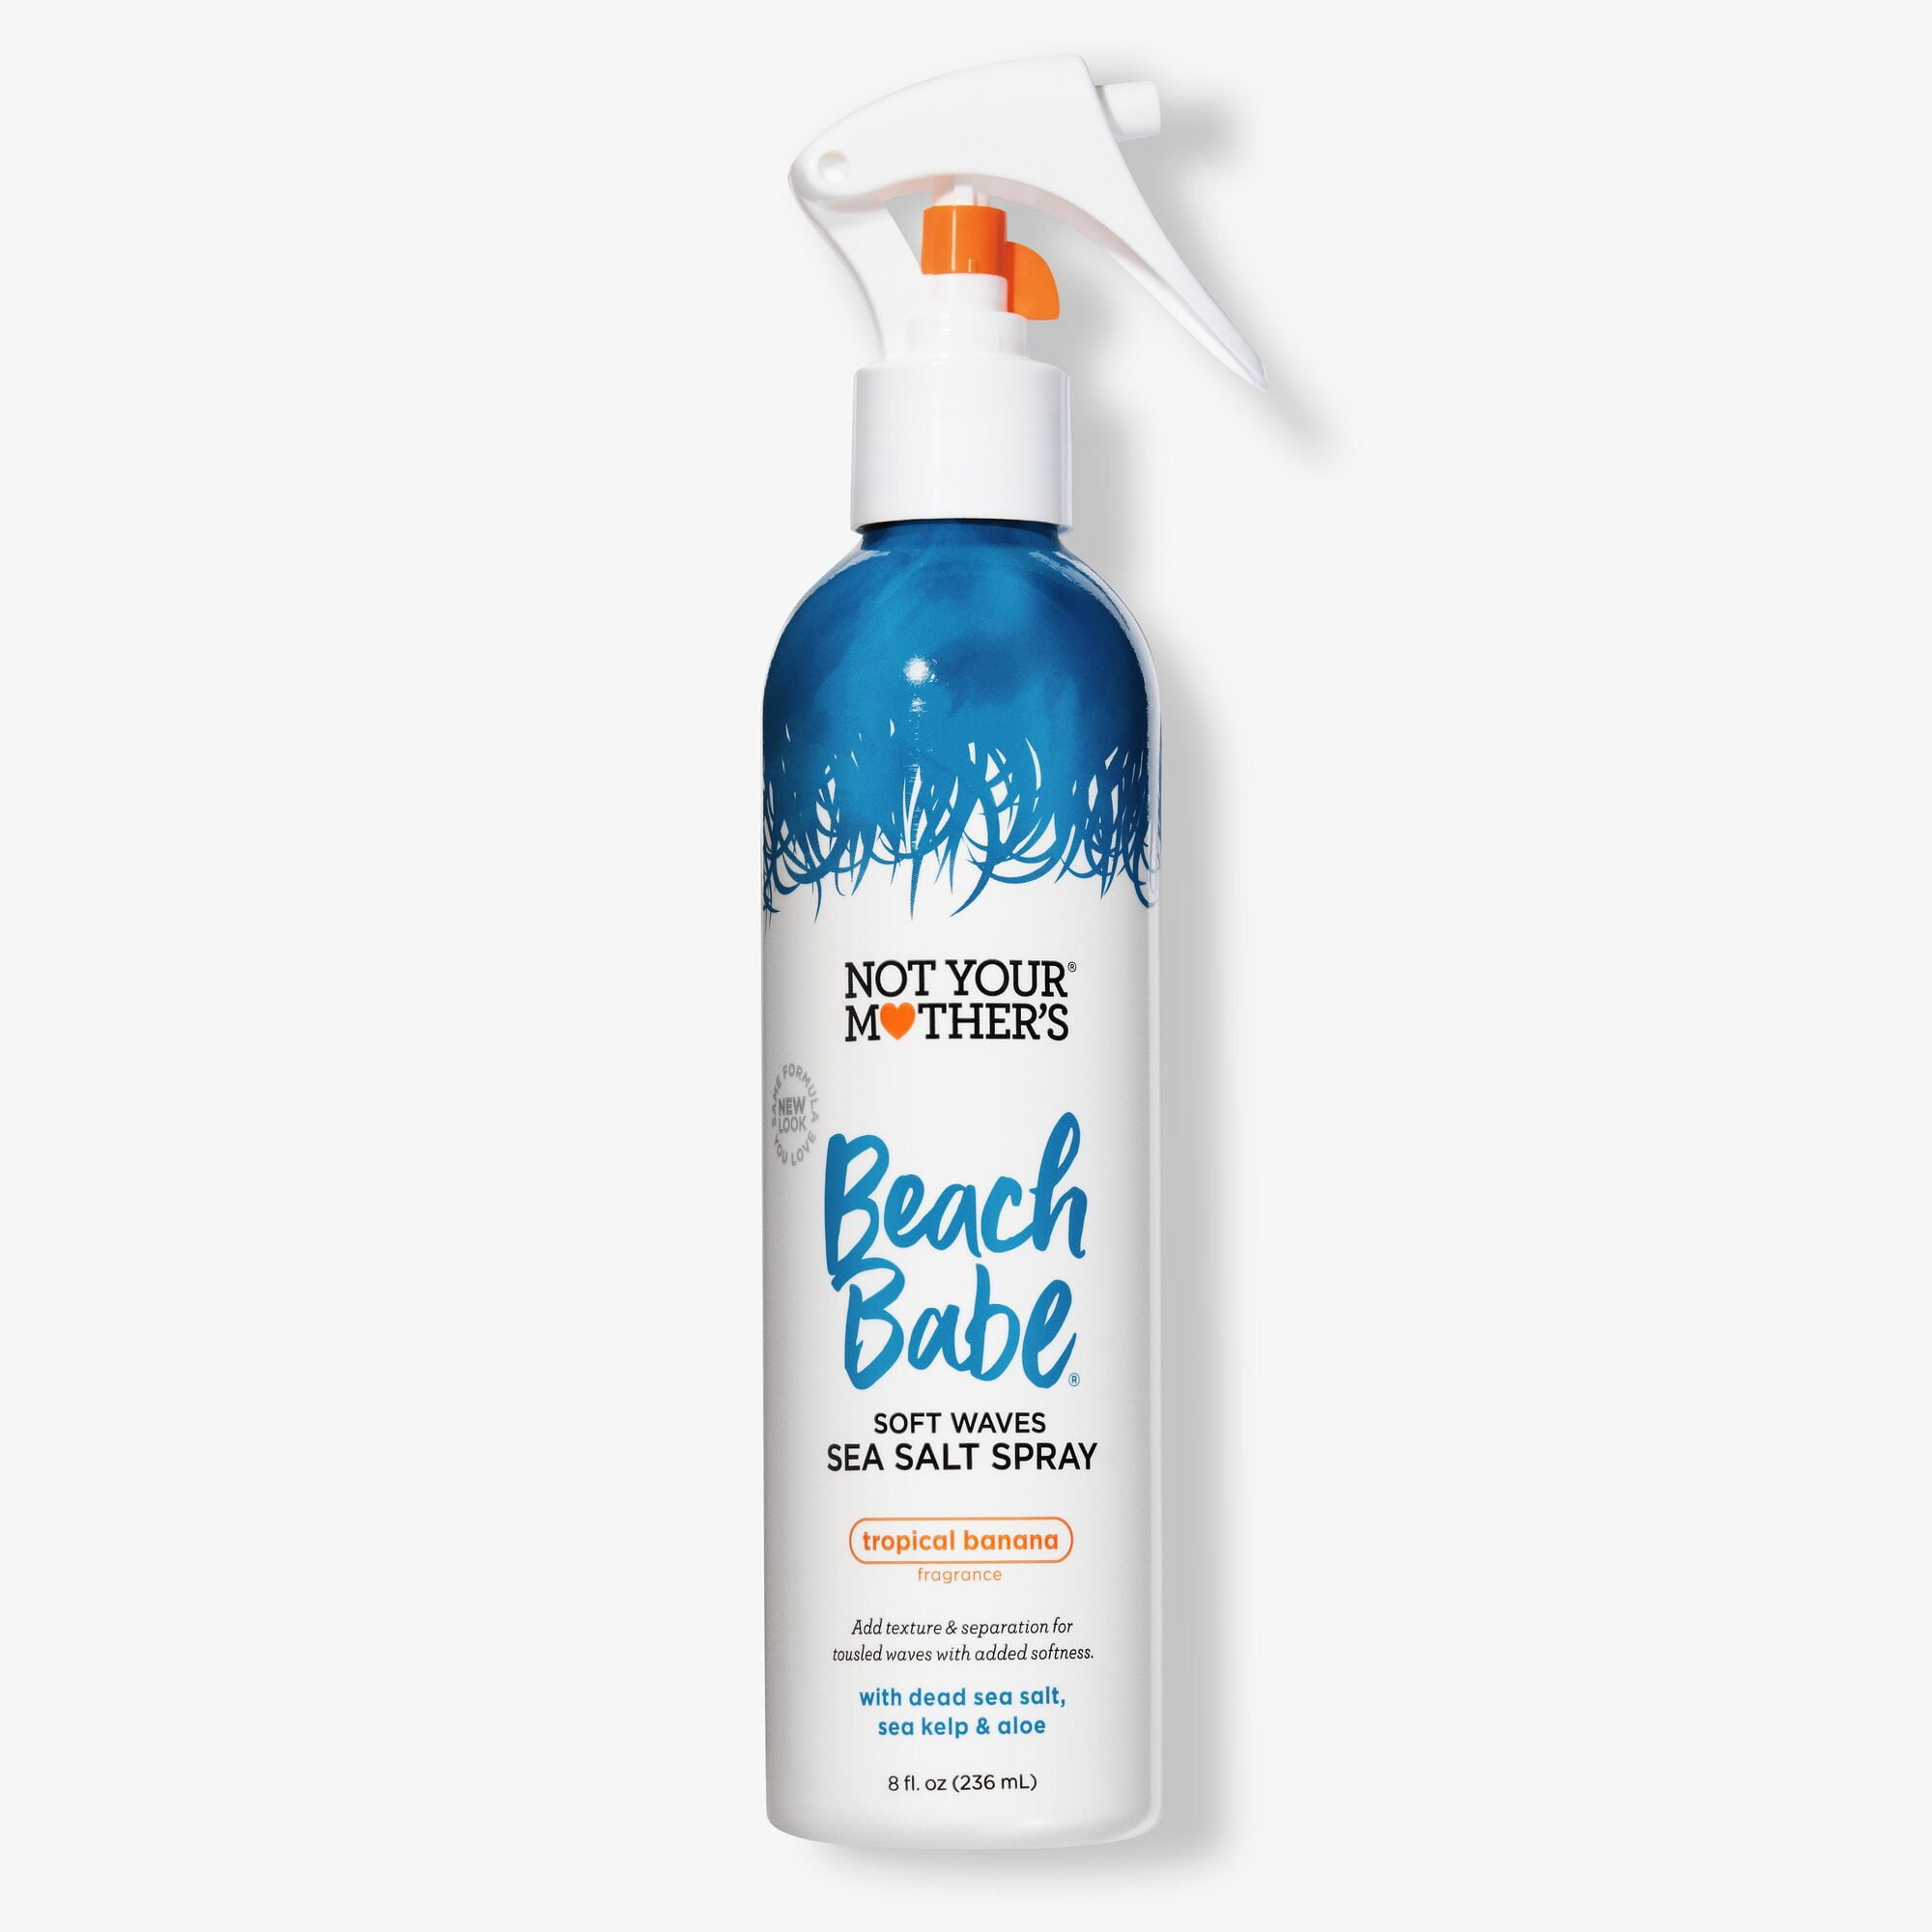 Not Your Mother's Beach Babe Soft Waves Sea Salt Spray for All Hair Types, 8 fl oz